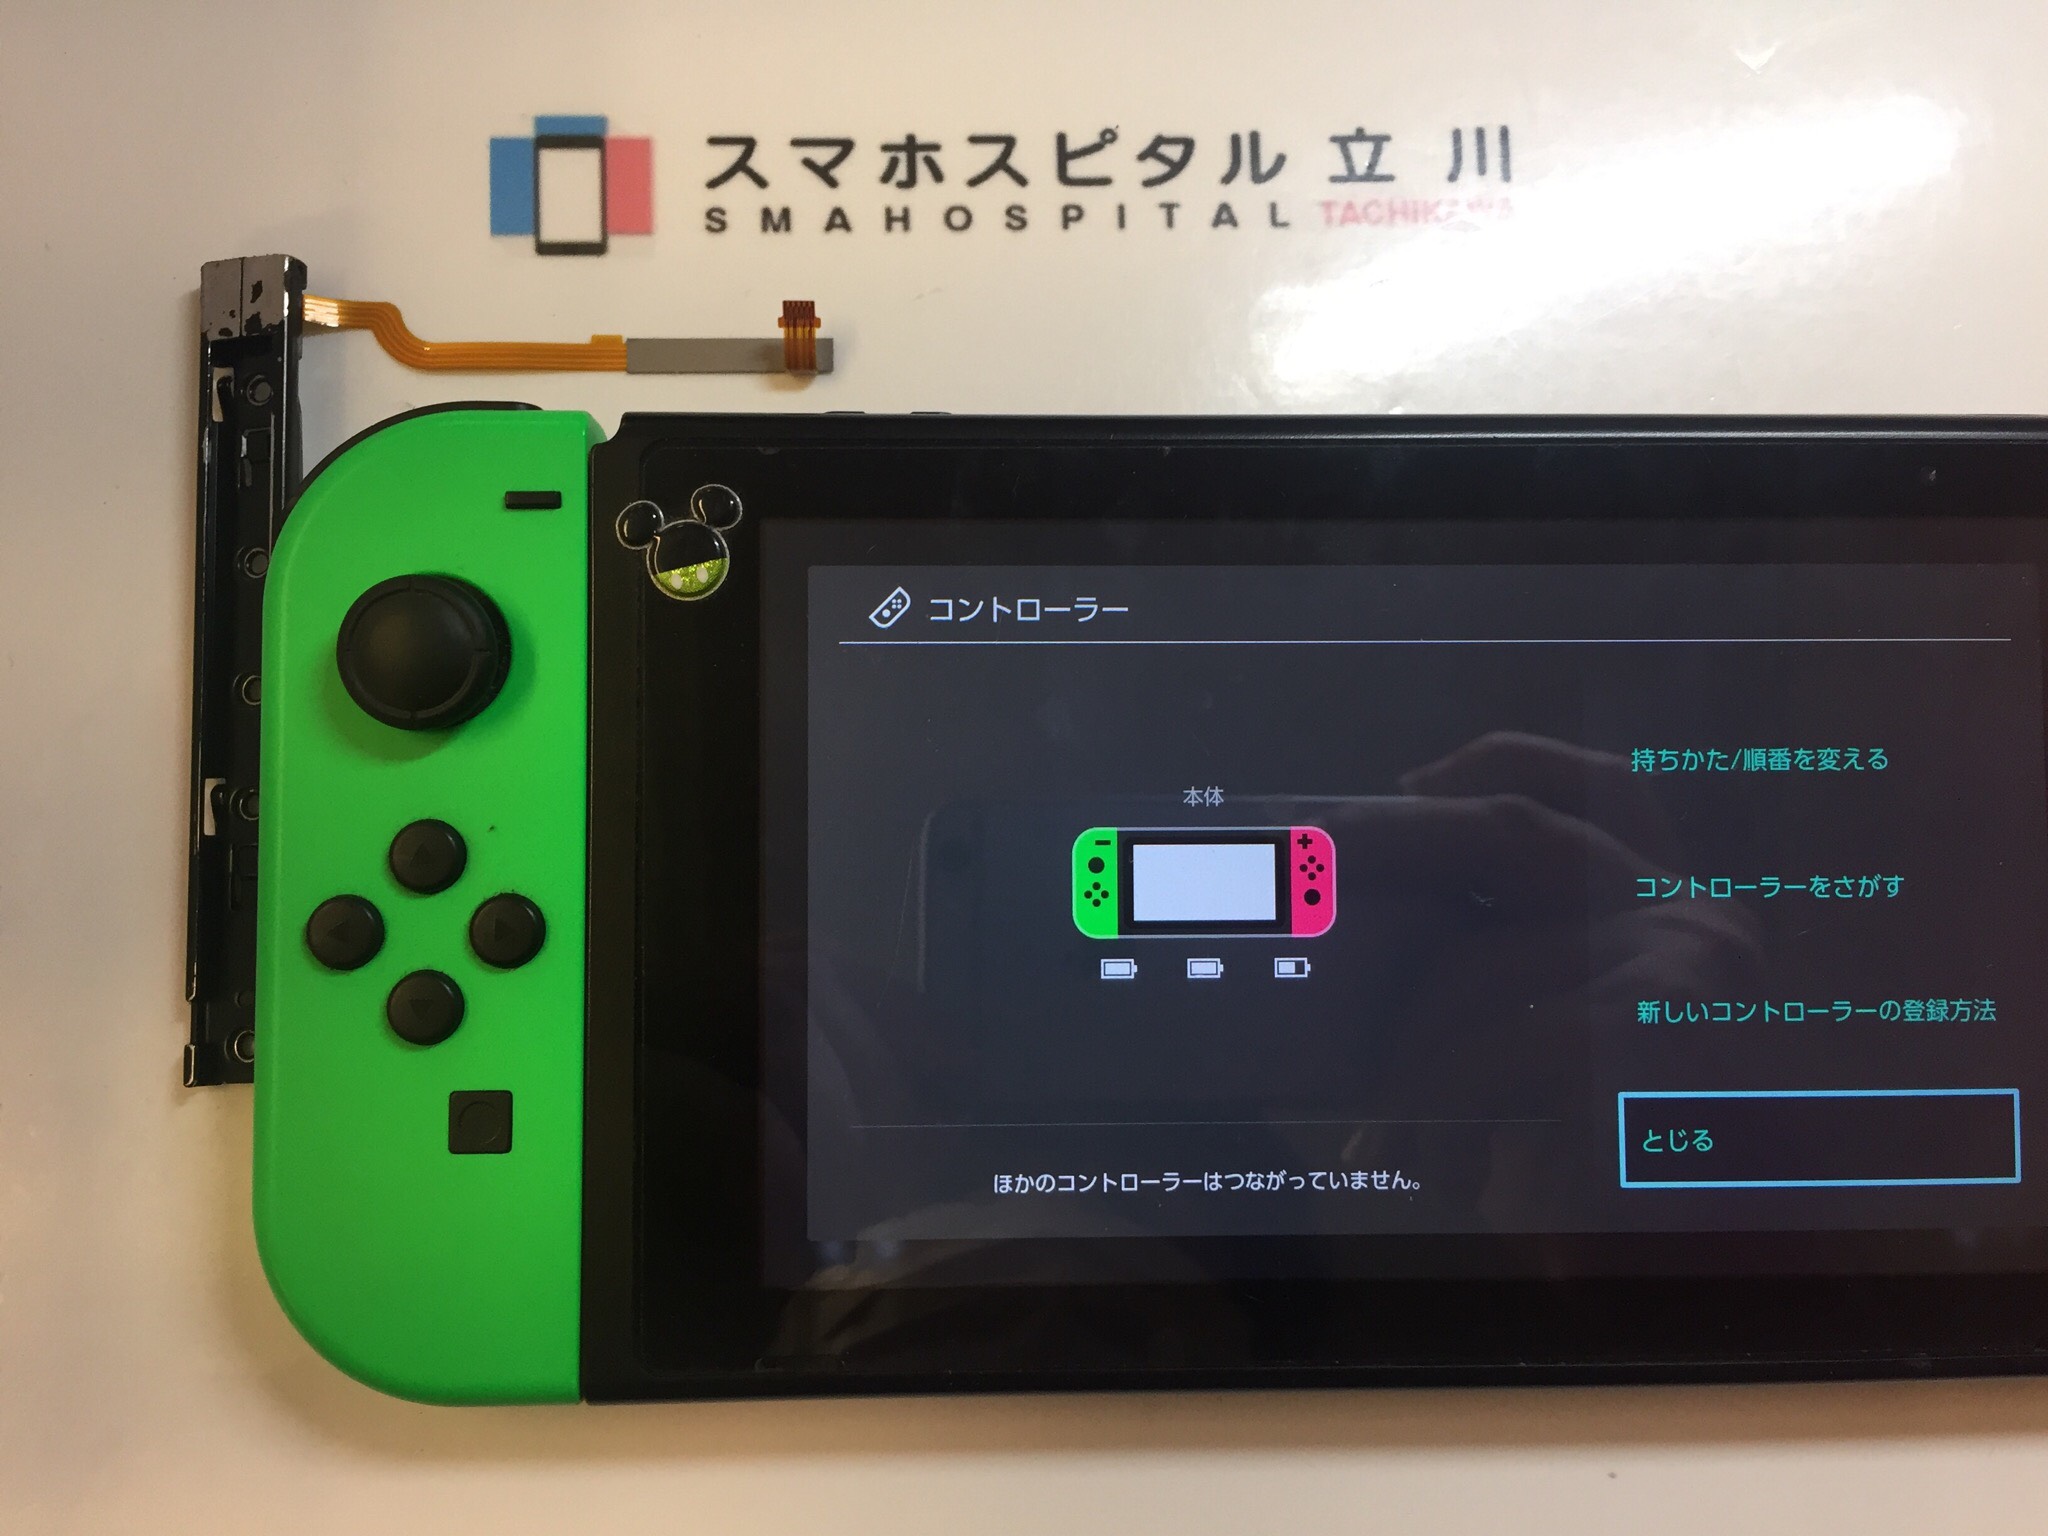 Nintendo Switch 左レールが認識しない端末の修理 Nintendo3ds Switch Psp 修理のゲームホスピタル Nintendo3ds ニンテンドーds Psp 修理